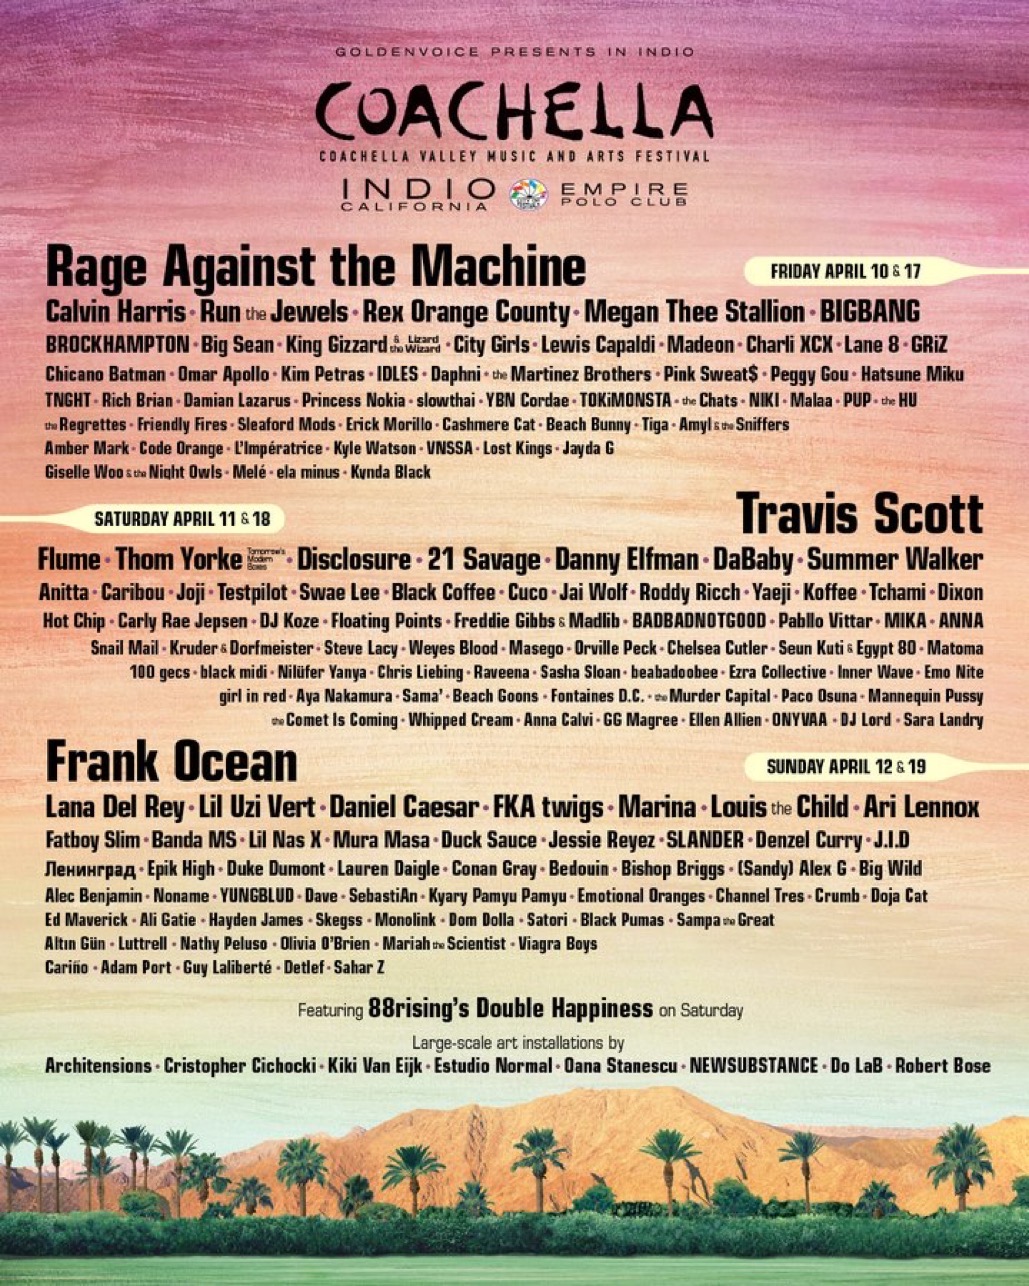 Frank Ocean To Headline Coachella In 2023 - theJasmineBRAND